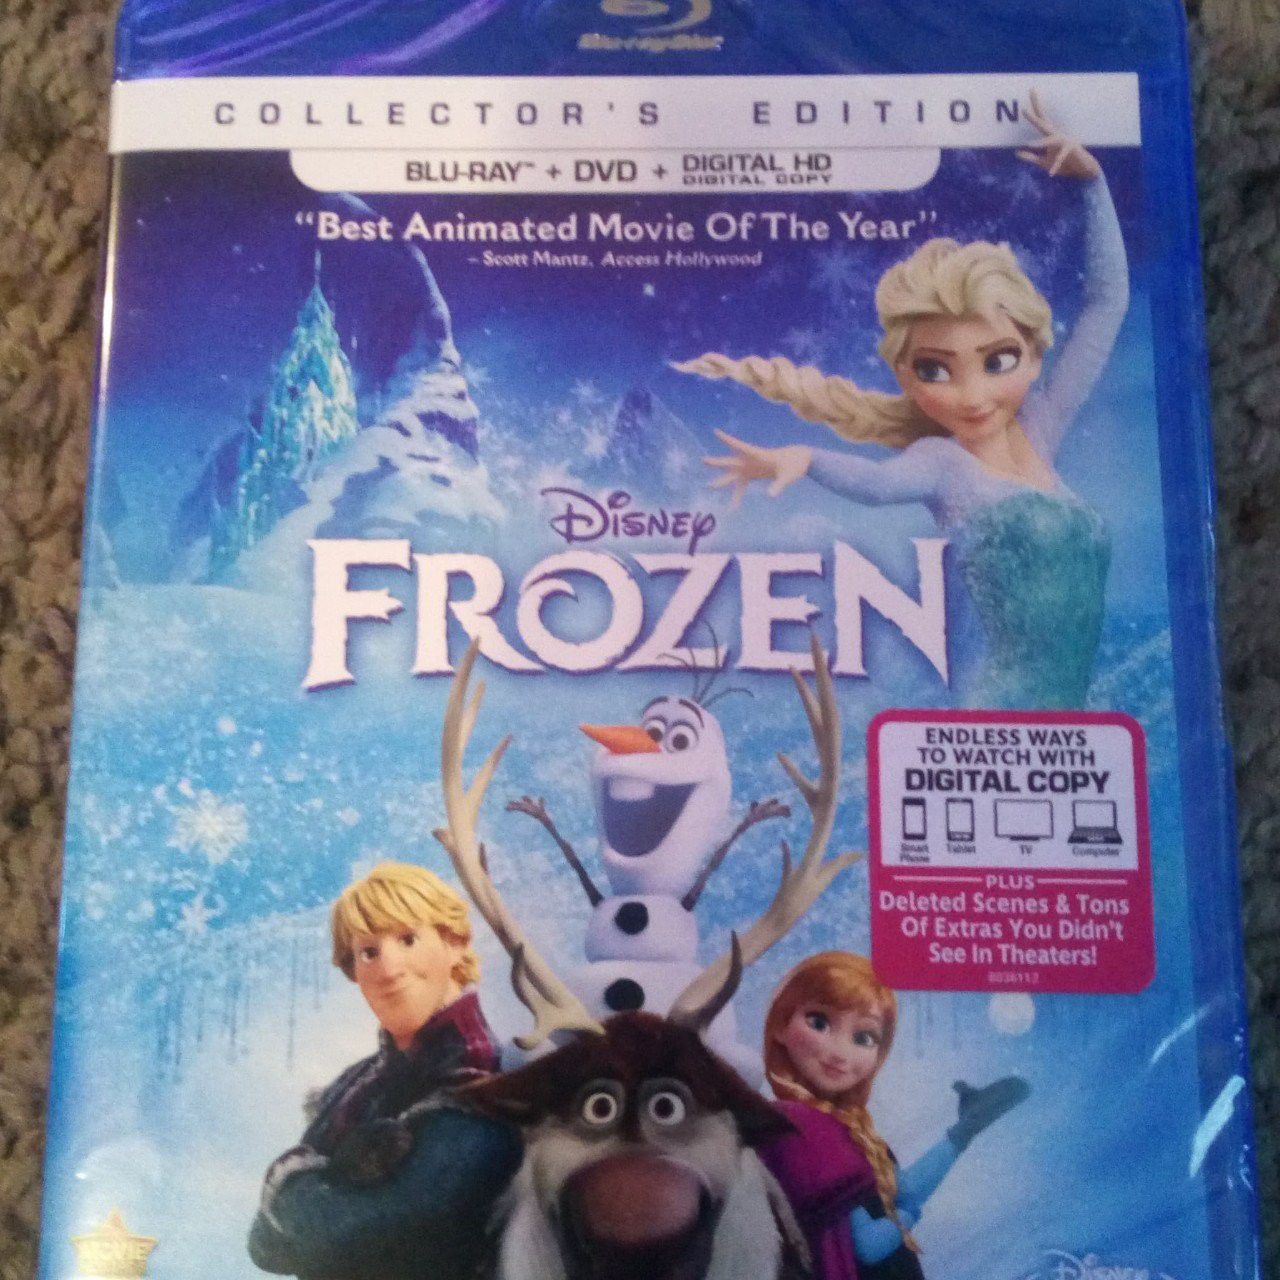 Digital Movie Code for Disney's Frozen in HD